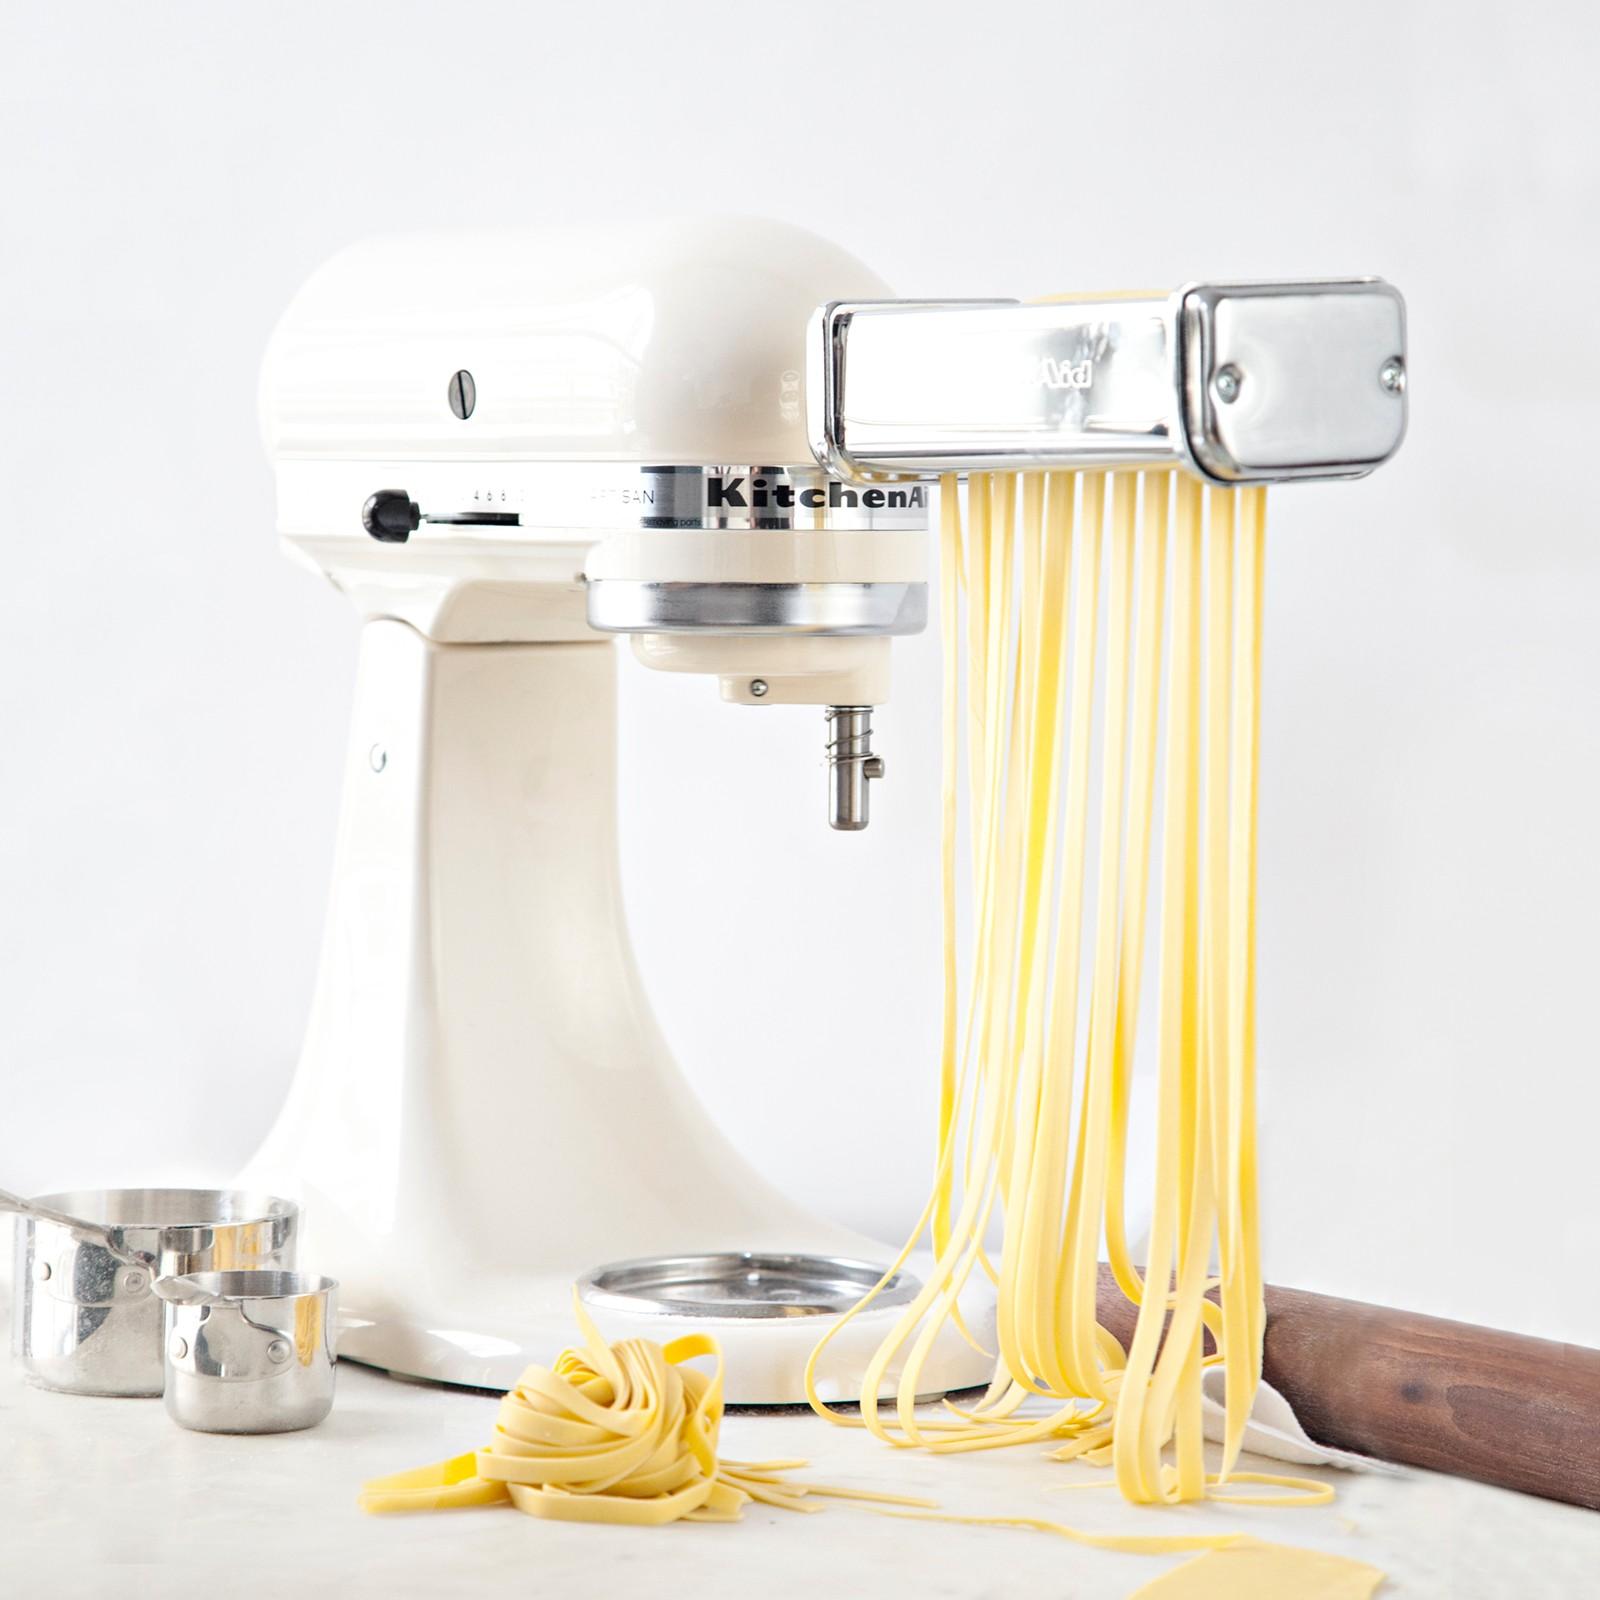 making pasta with kitchenaid mixer attachment